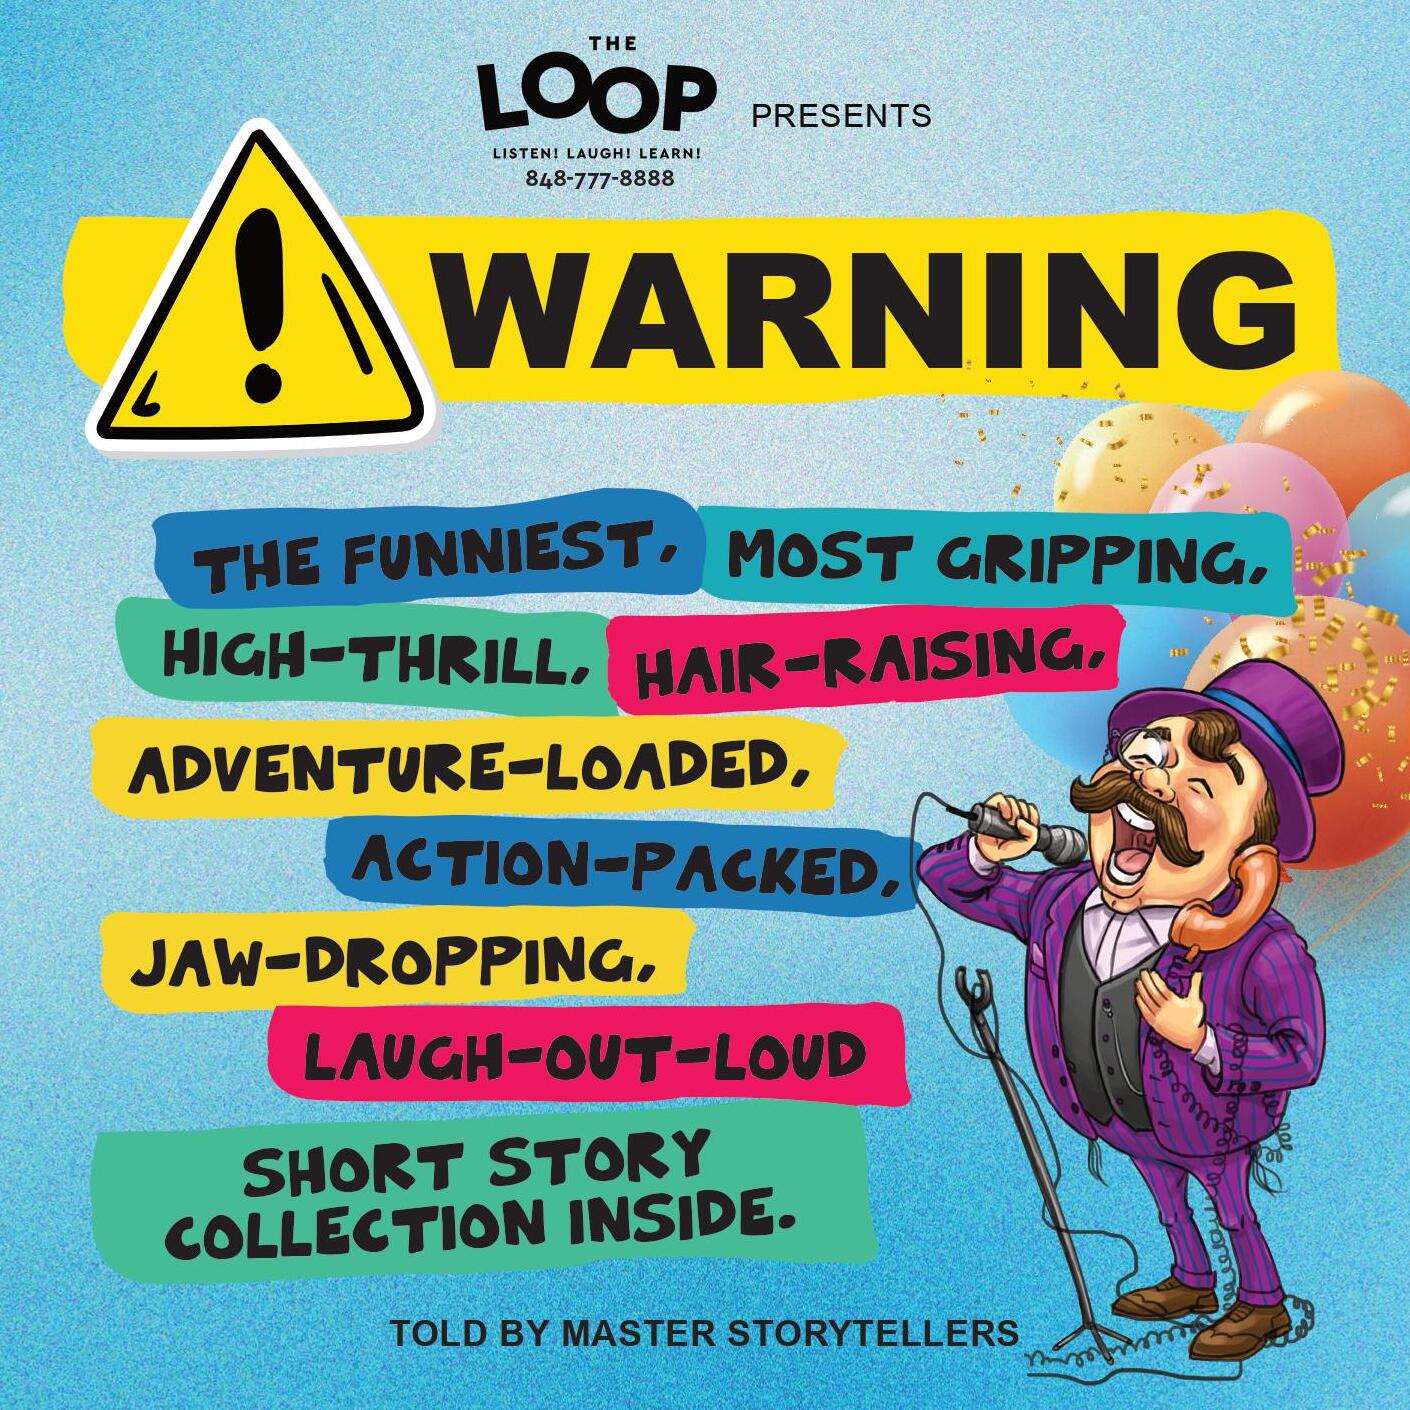 The Loop - Warning